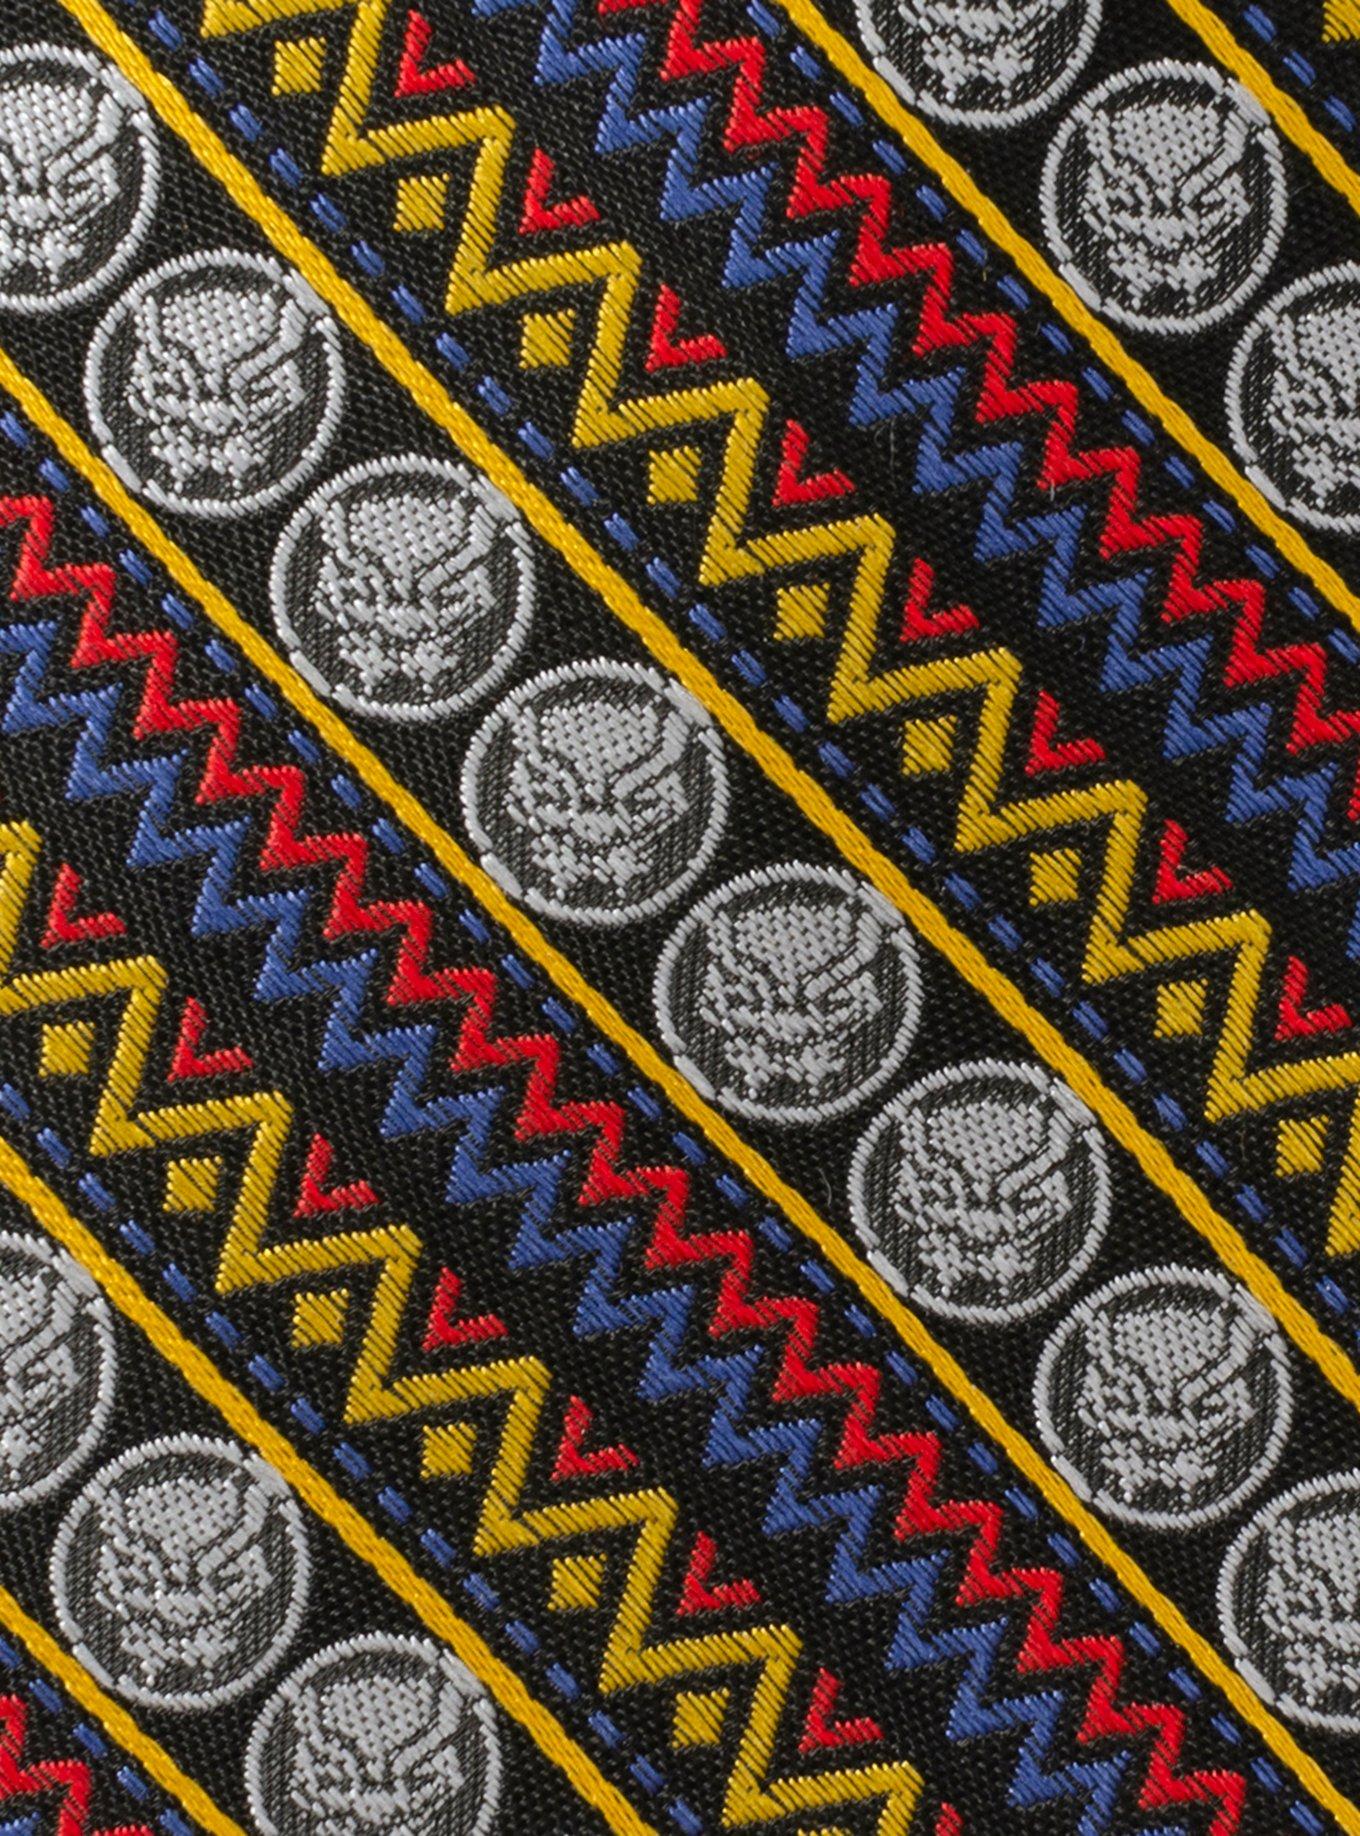 Marvel Black Panther Tribal Stripe Men's Tie